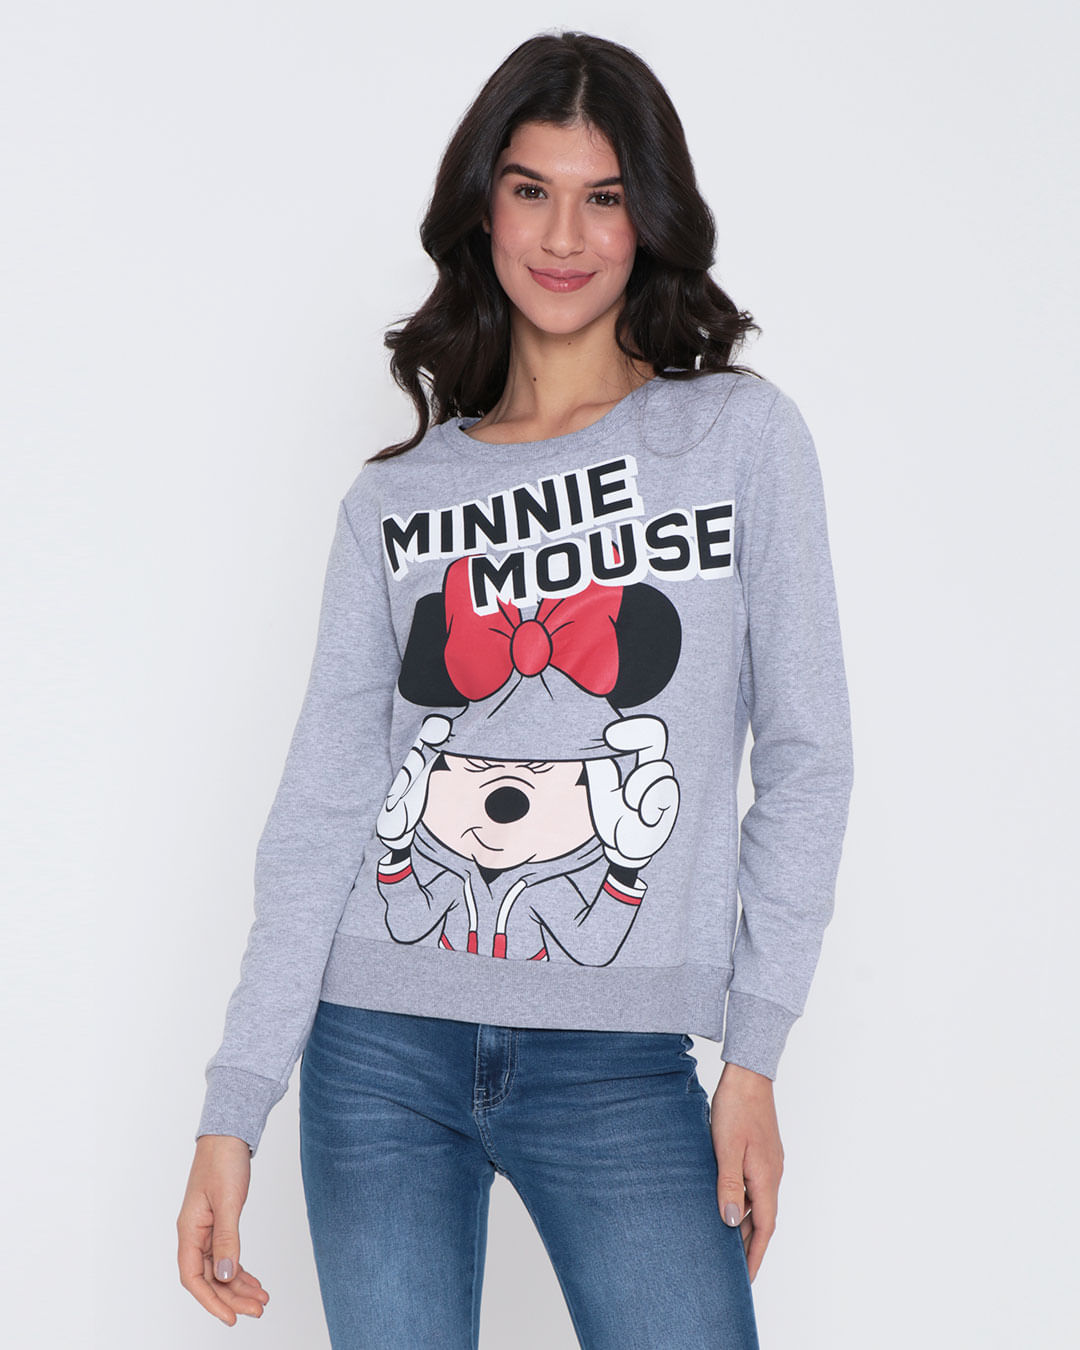 Blusao-Feminino-Moletinho-Disney-Minnie-Mouse-Cinza